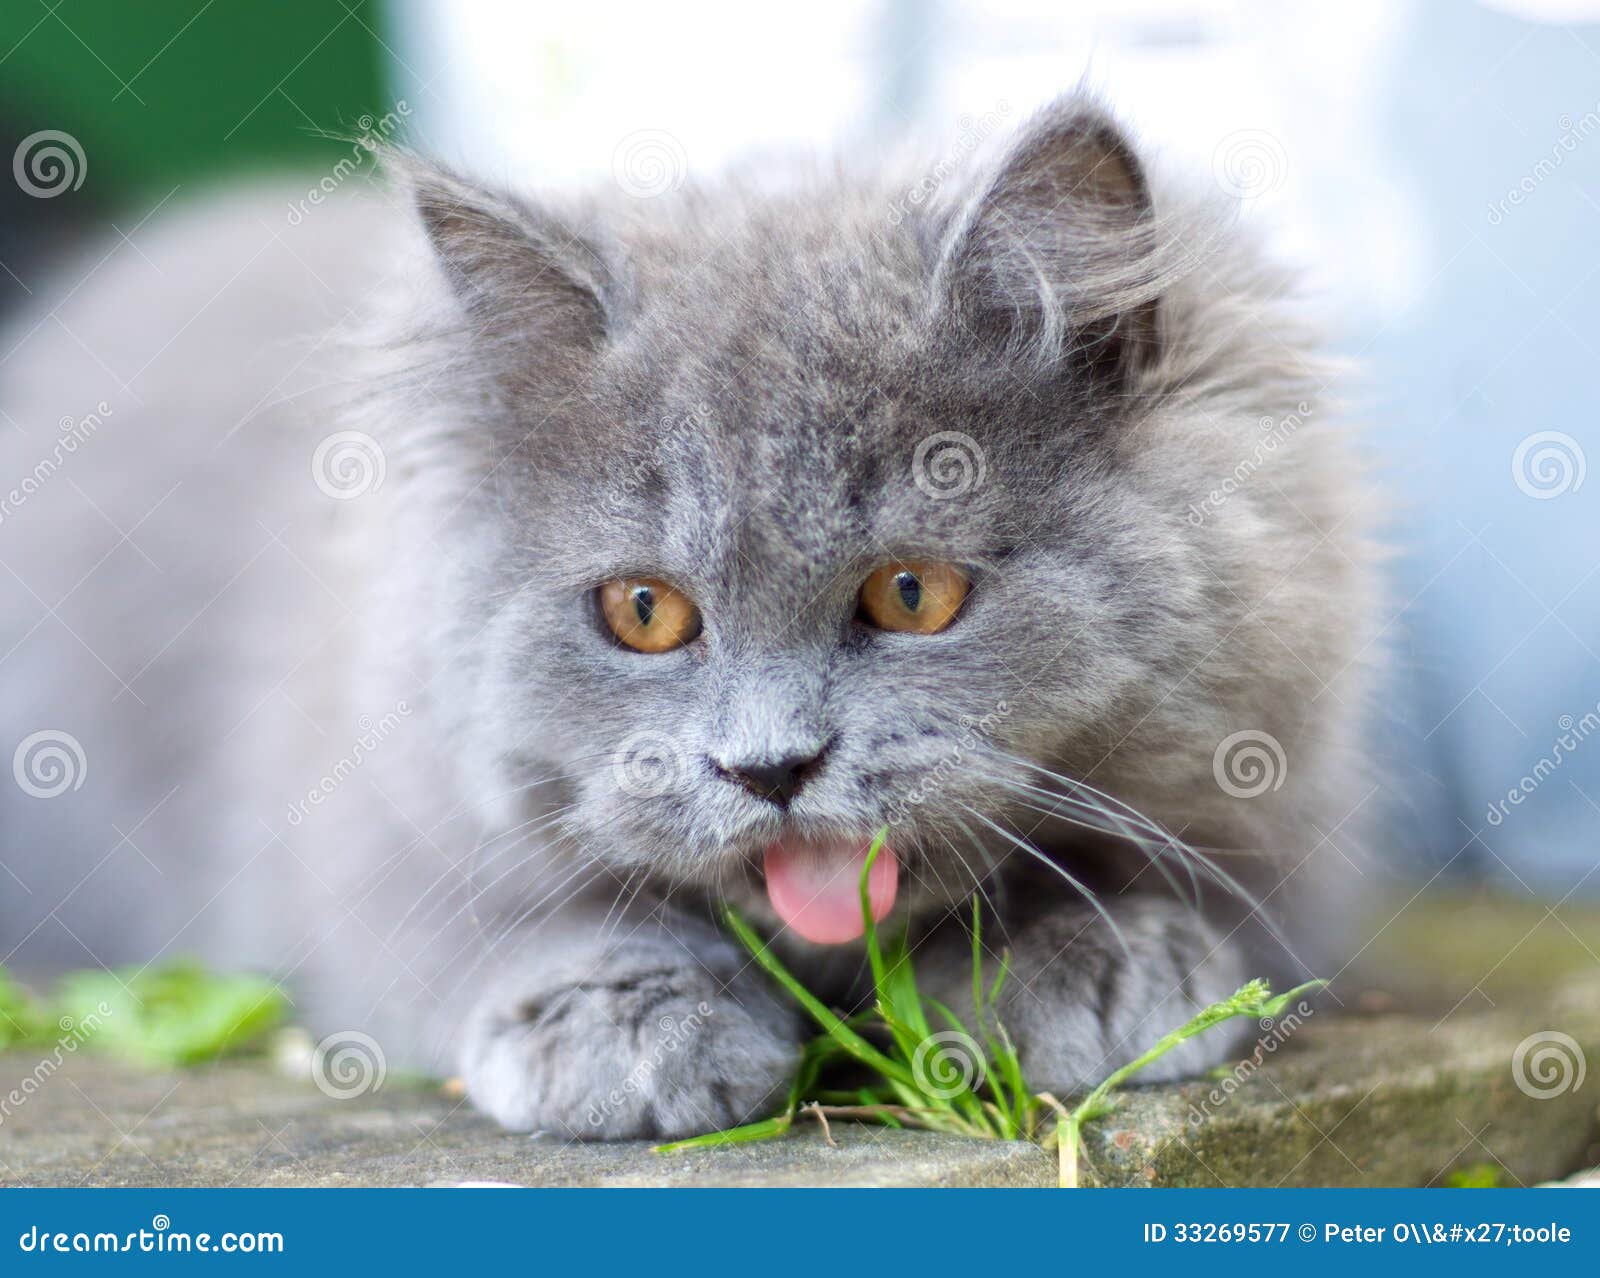 British Longhair kitten sitting outside licking a blade of grass.